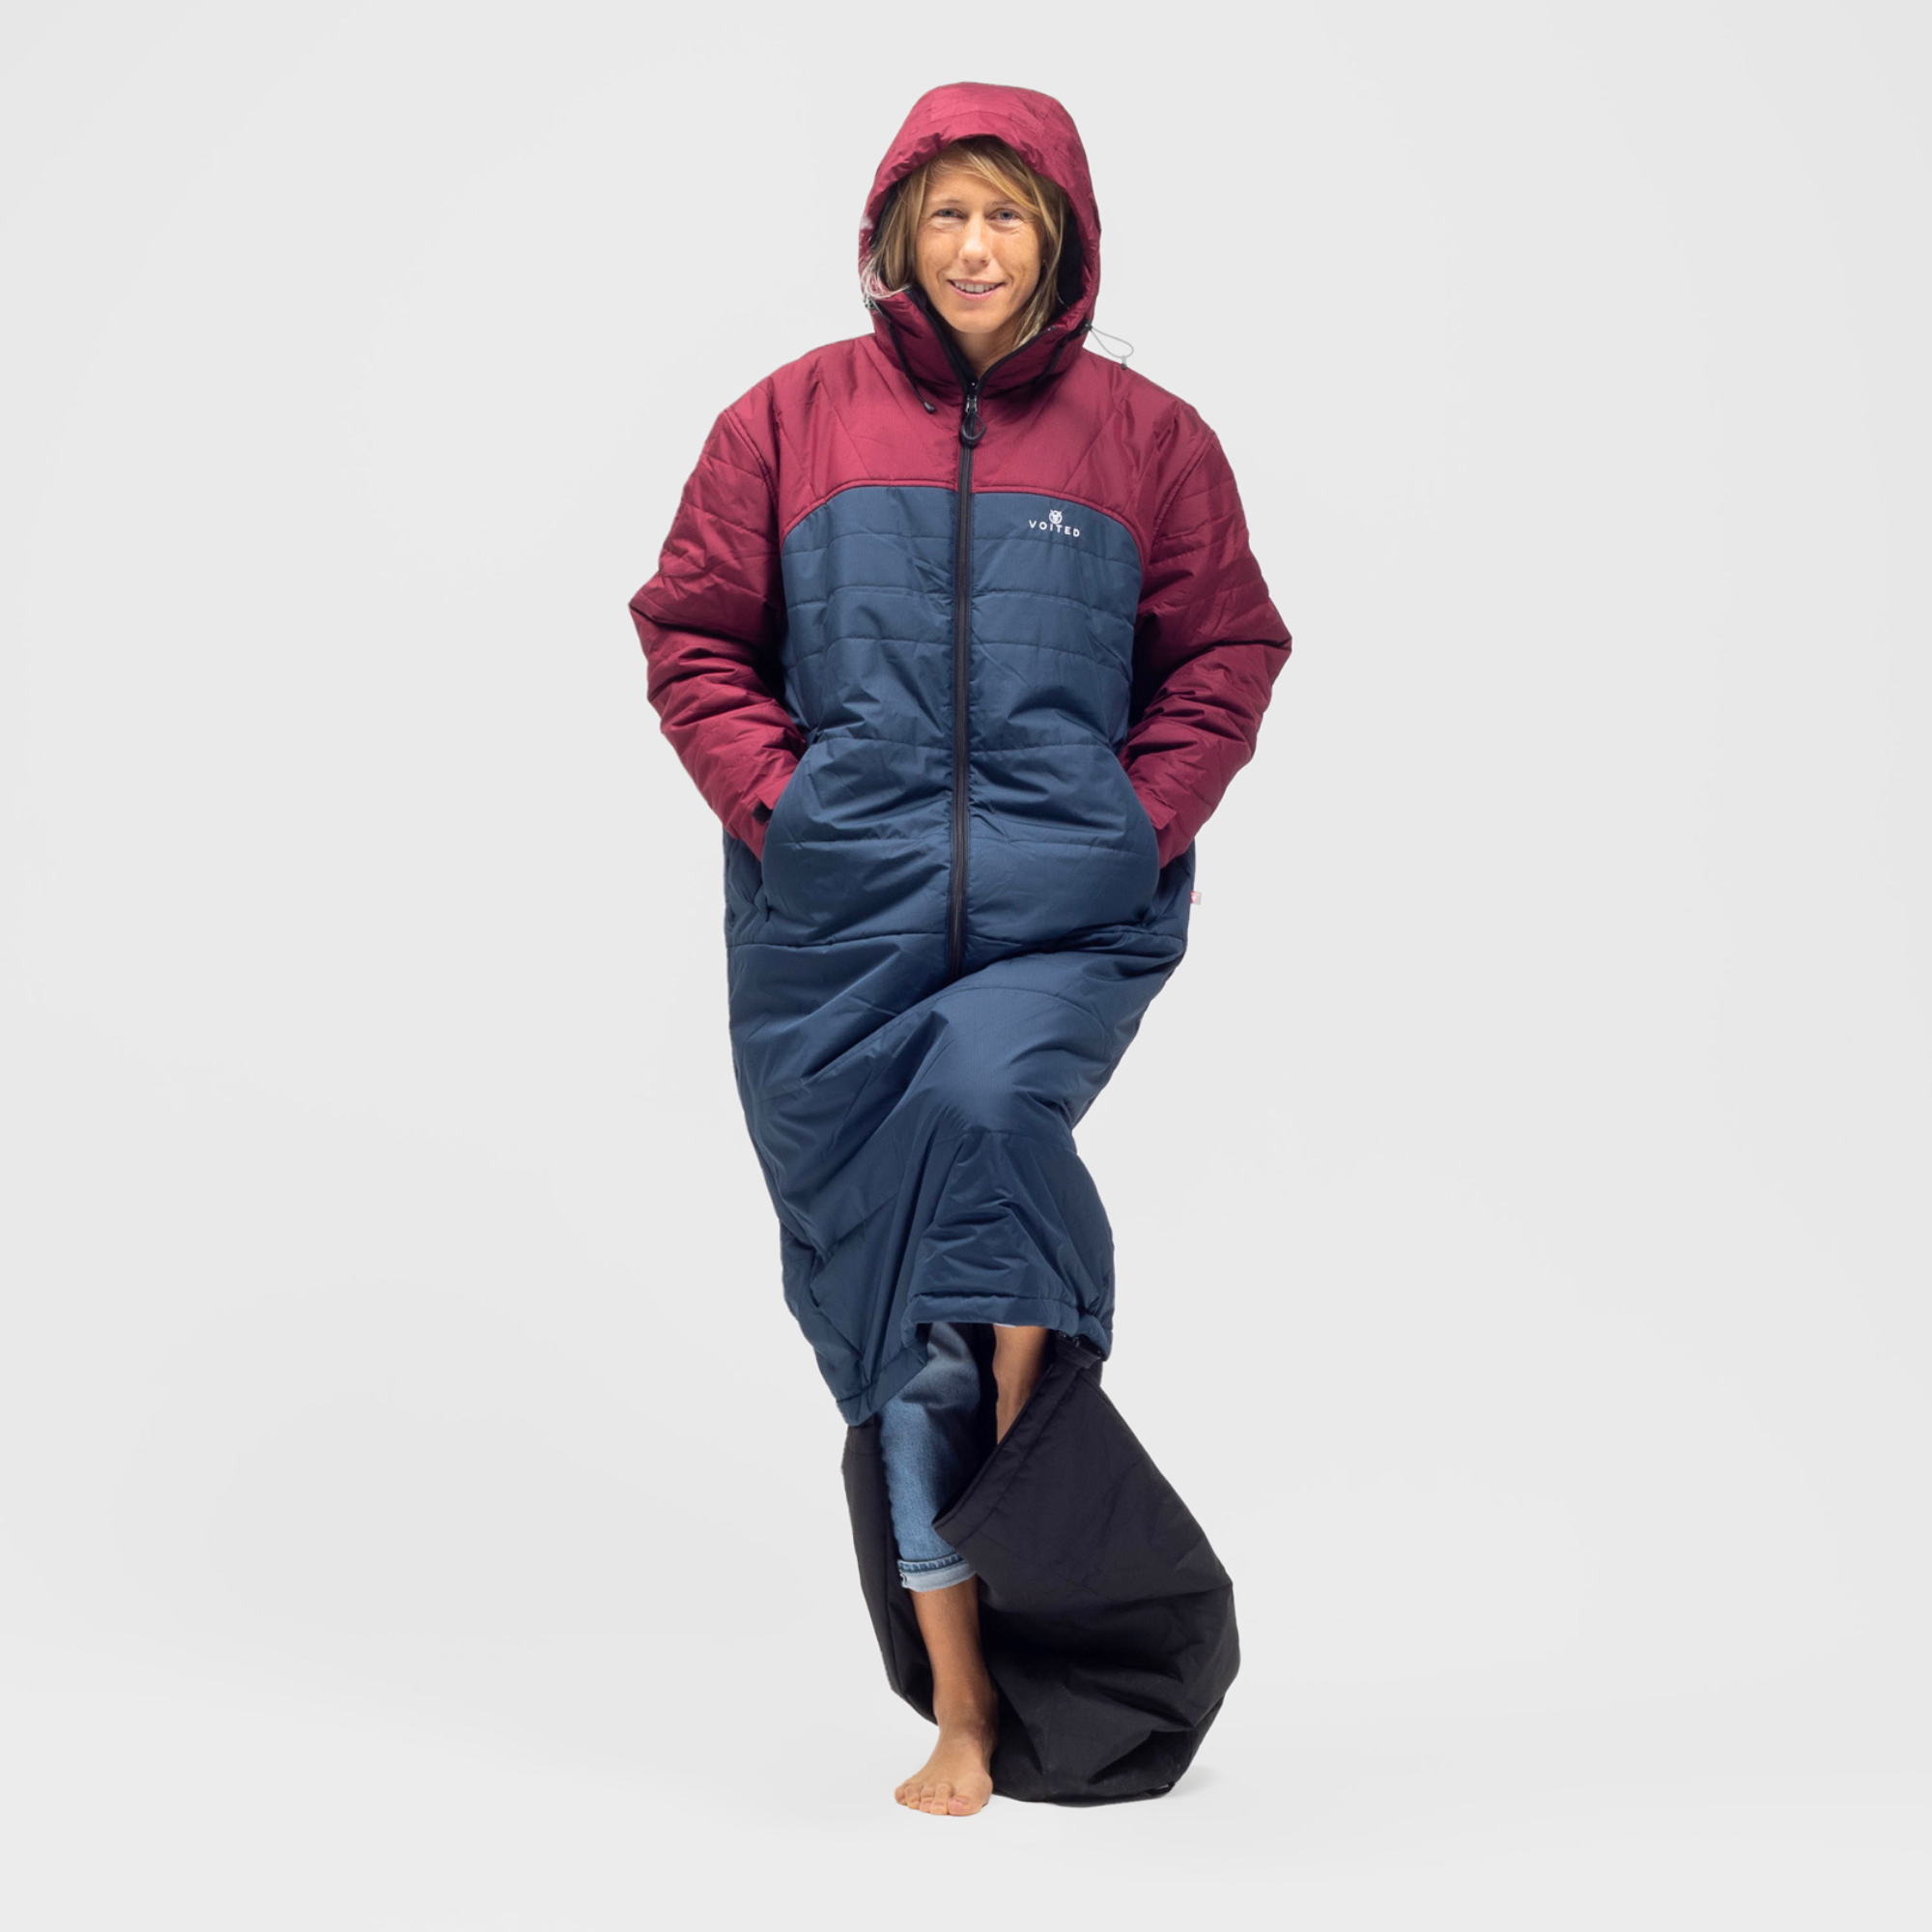 Manteau sac de couchage Slumber Jacket  | Voited